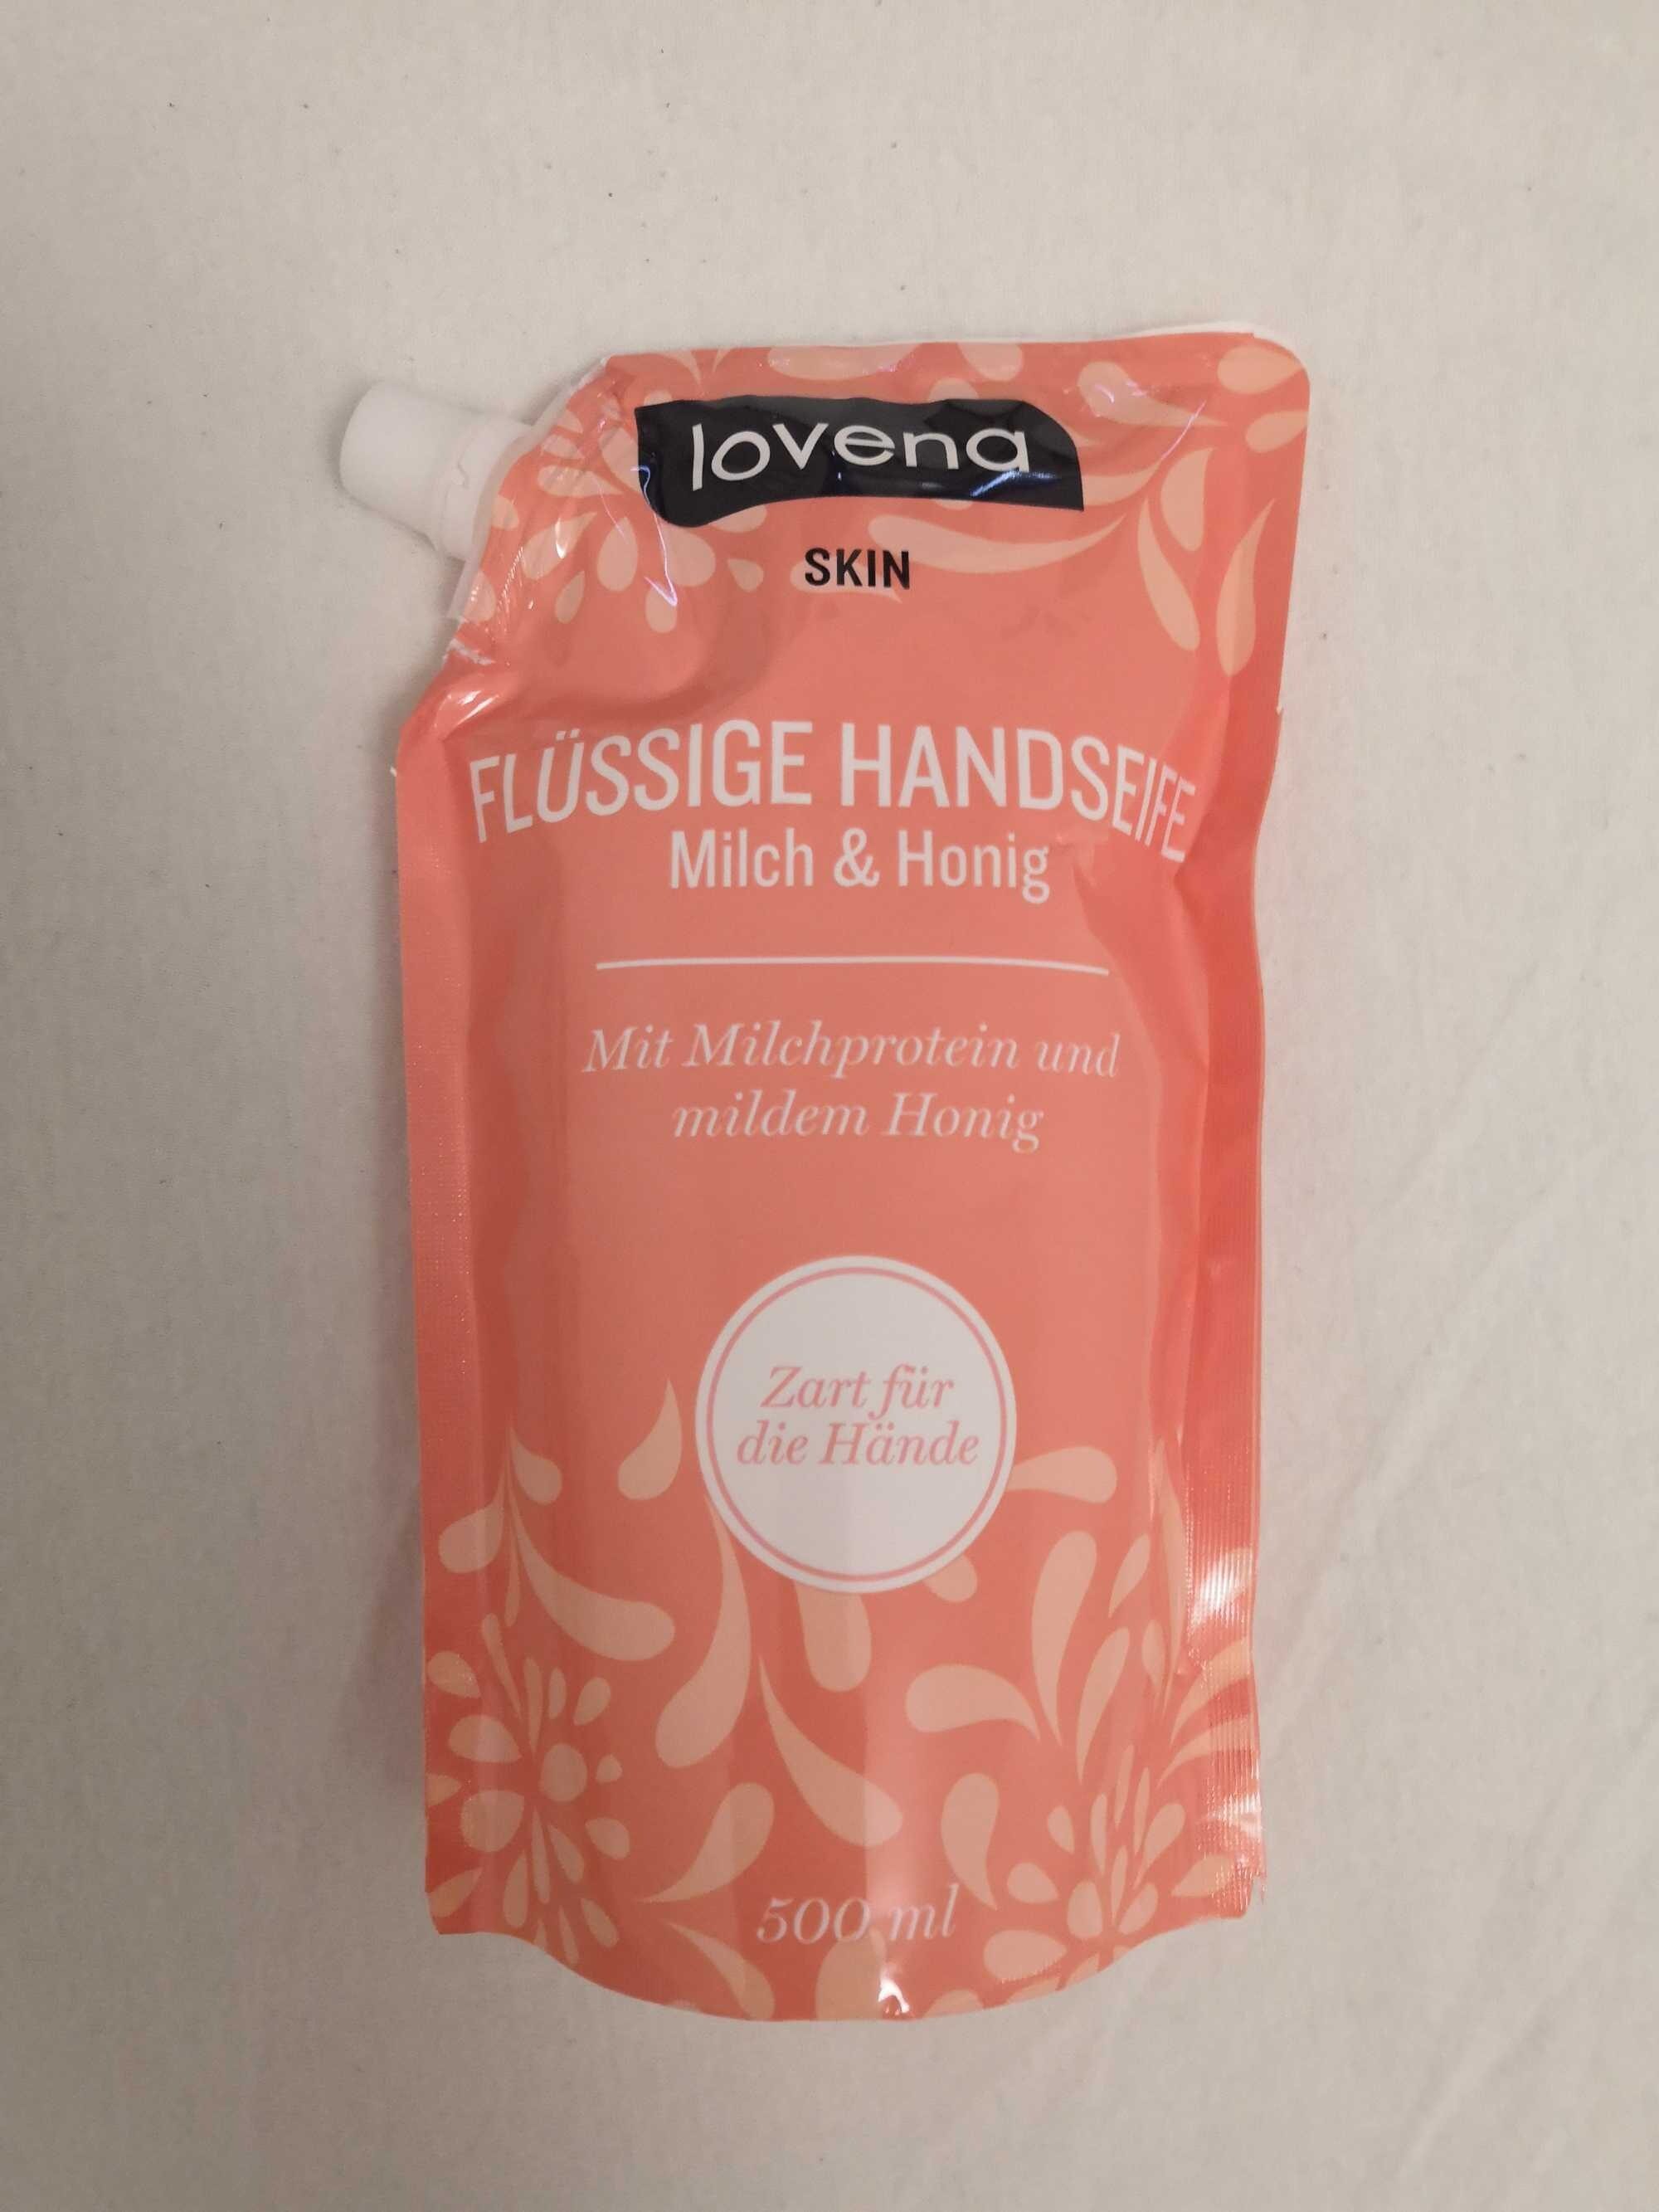 lovena Skin Flüssige Handseife Milch & Honig - Produto - de